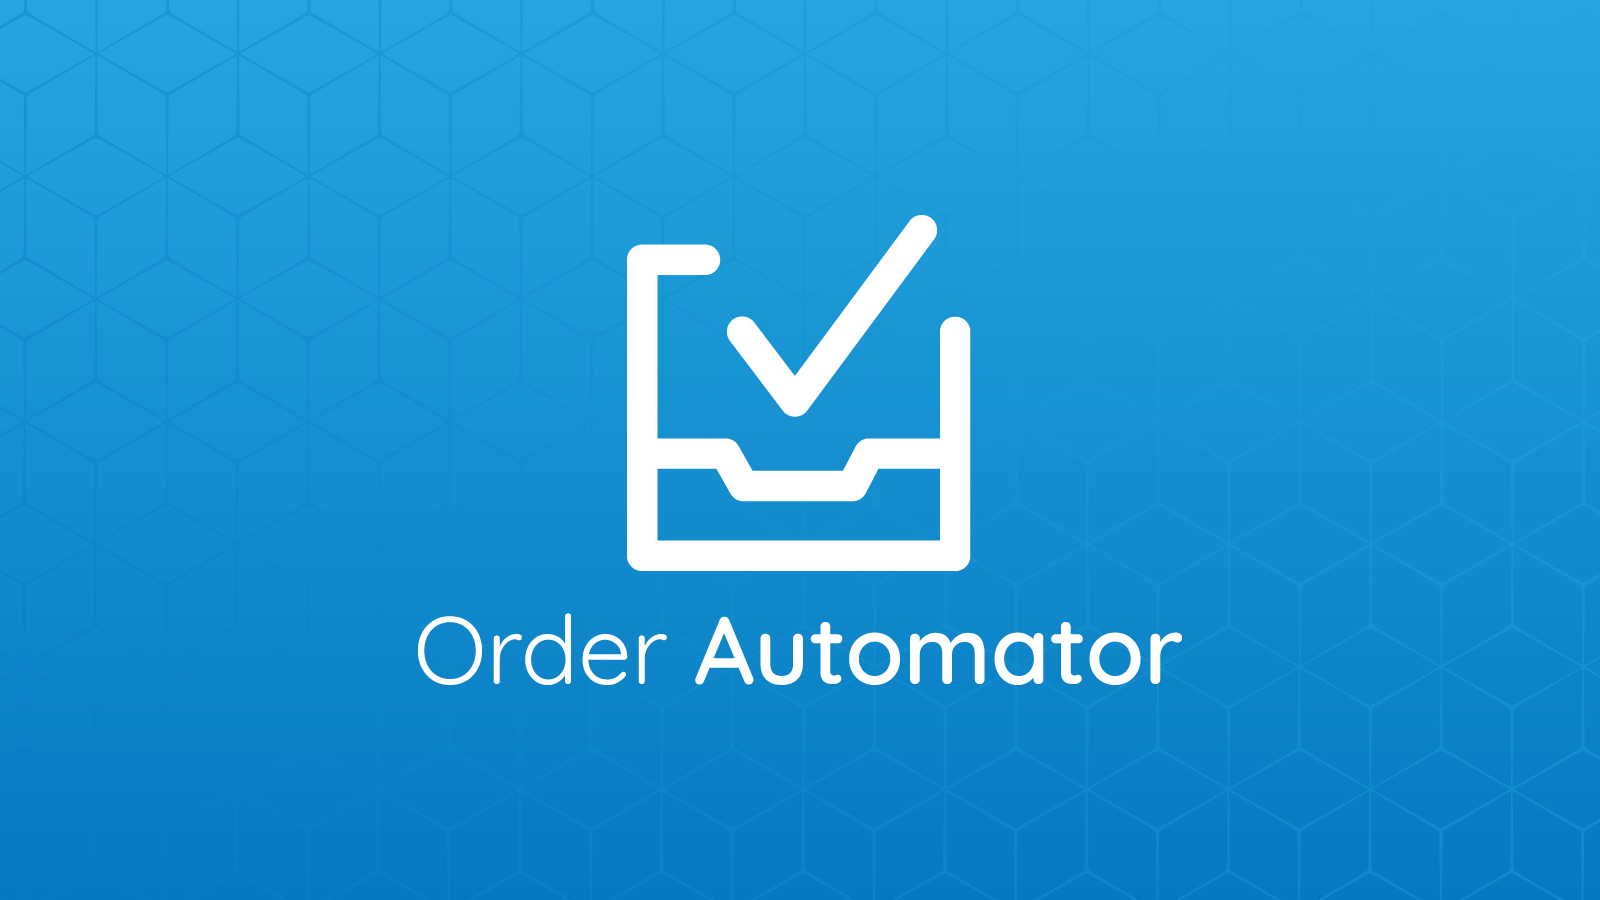 Order Automator